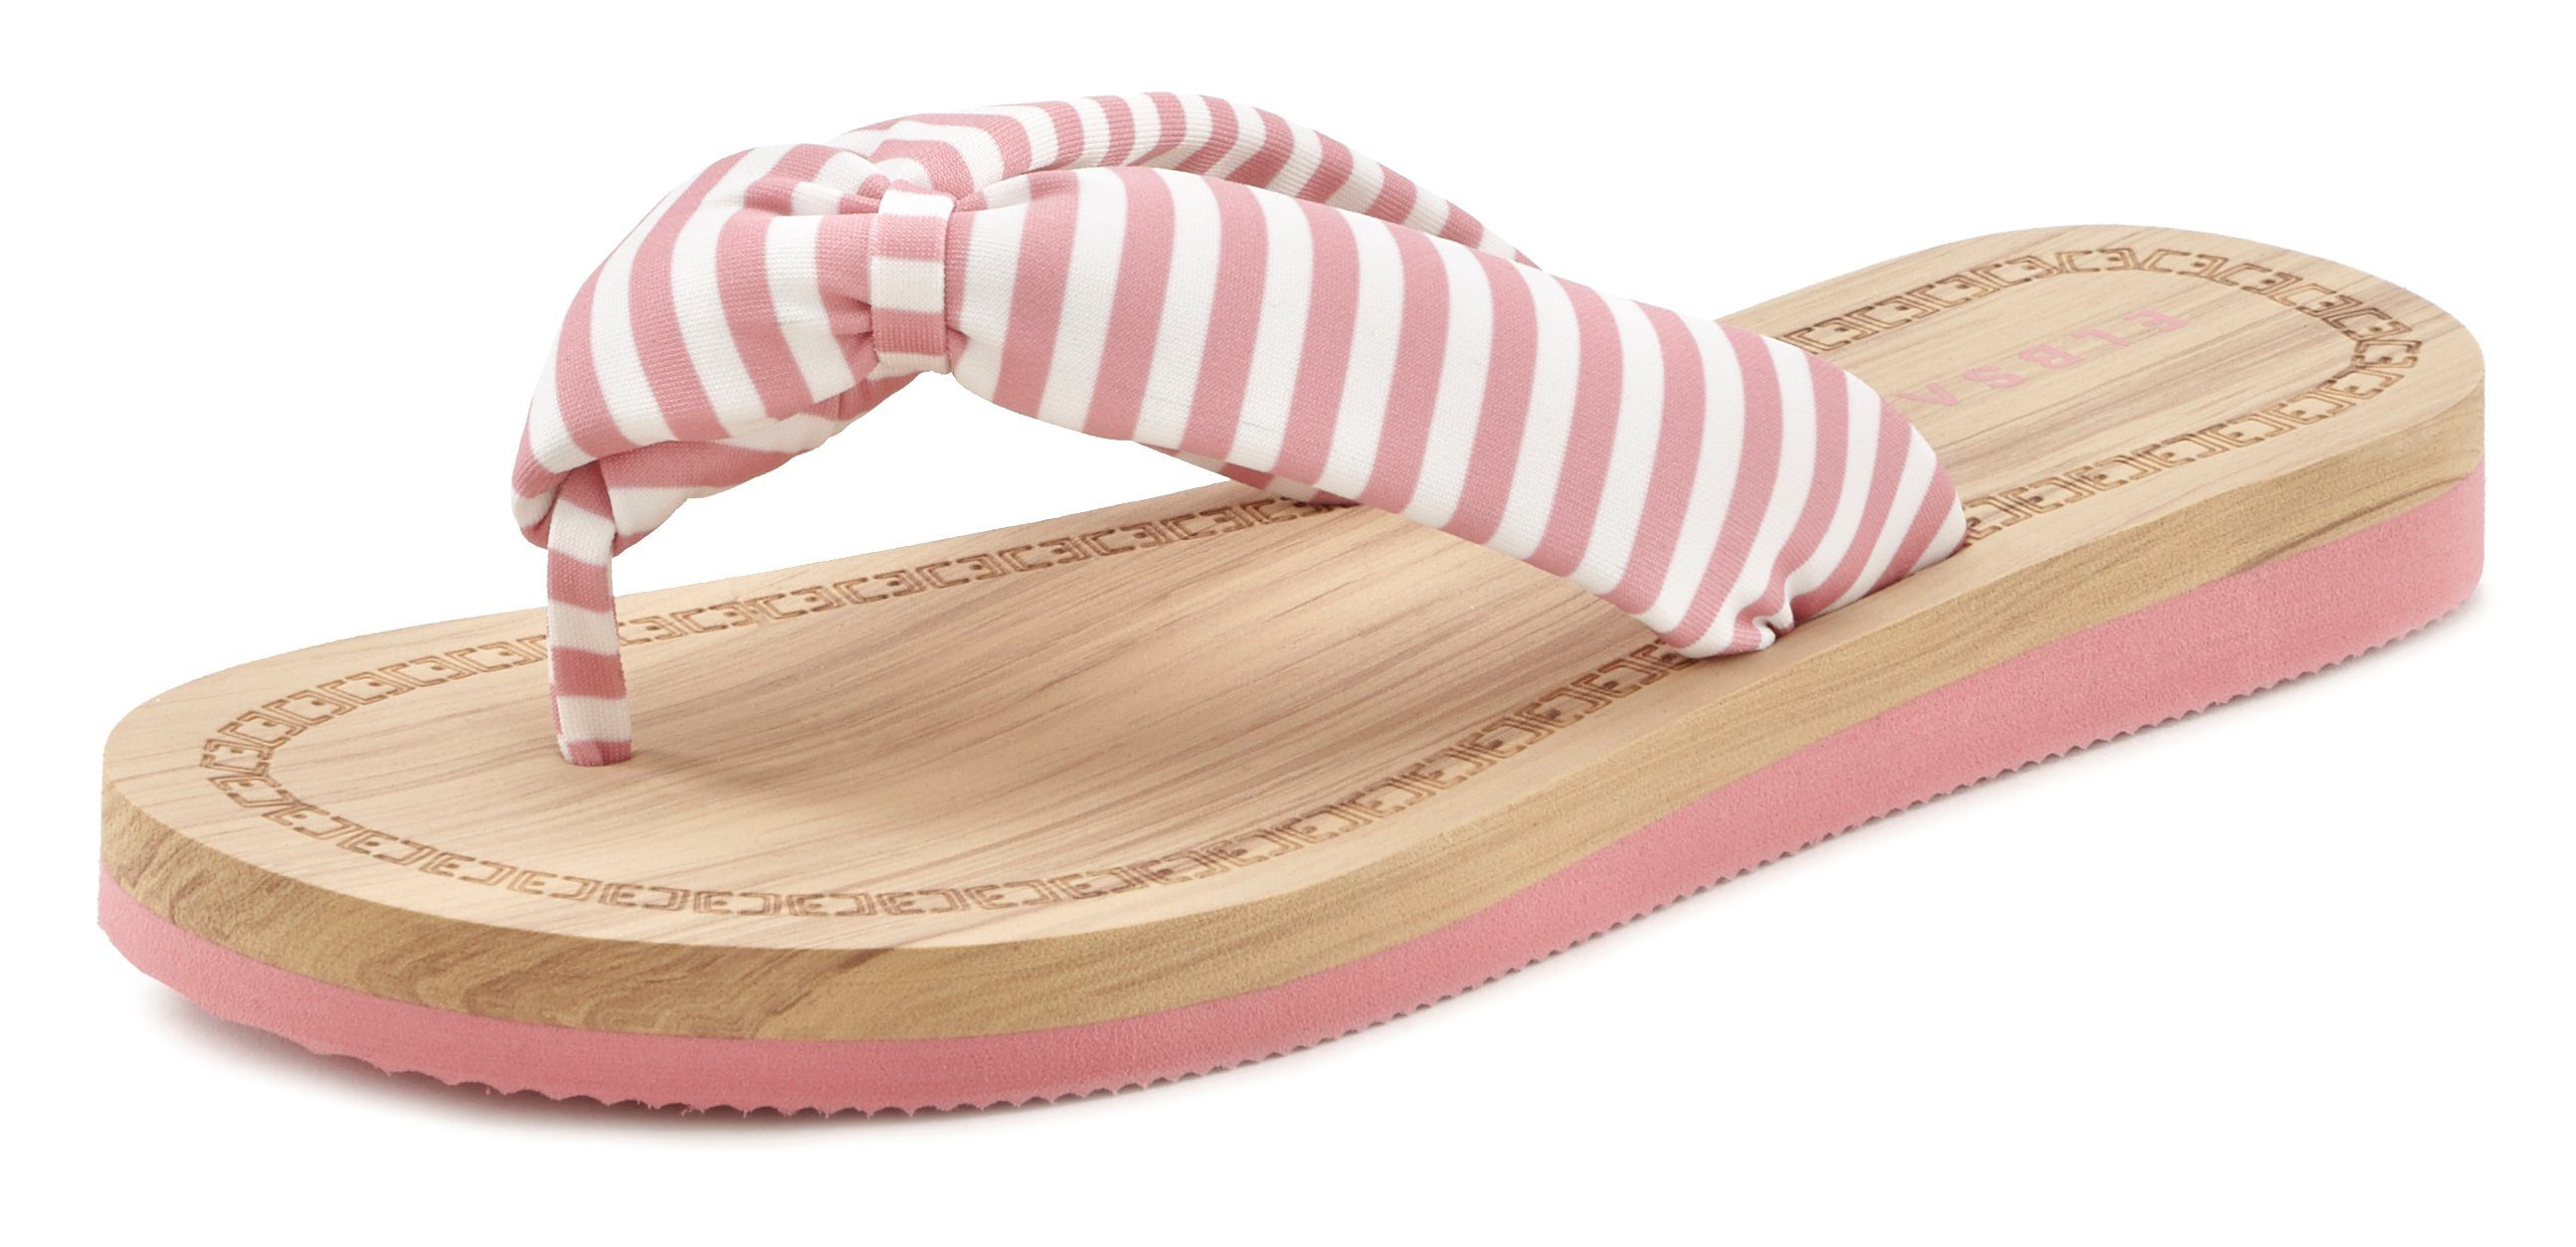 Badeschuh Sandale, Badezehentrenner rosa-gestreift VEGAN Elbsand Pantolette, ultraleicht